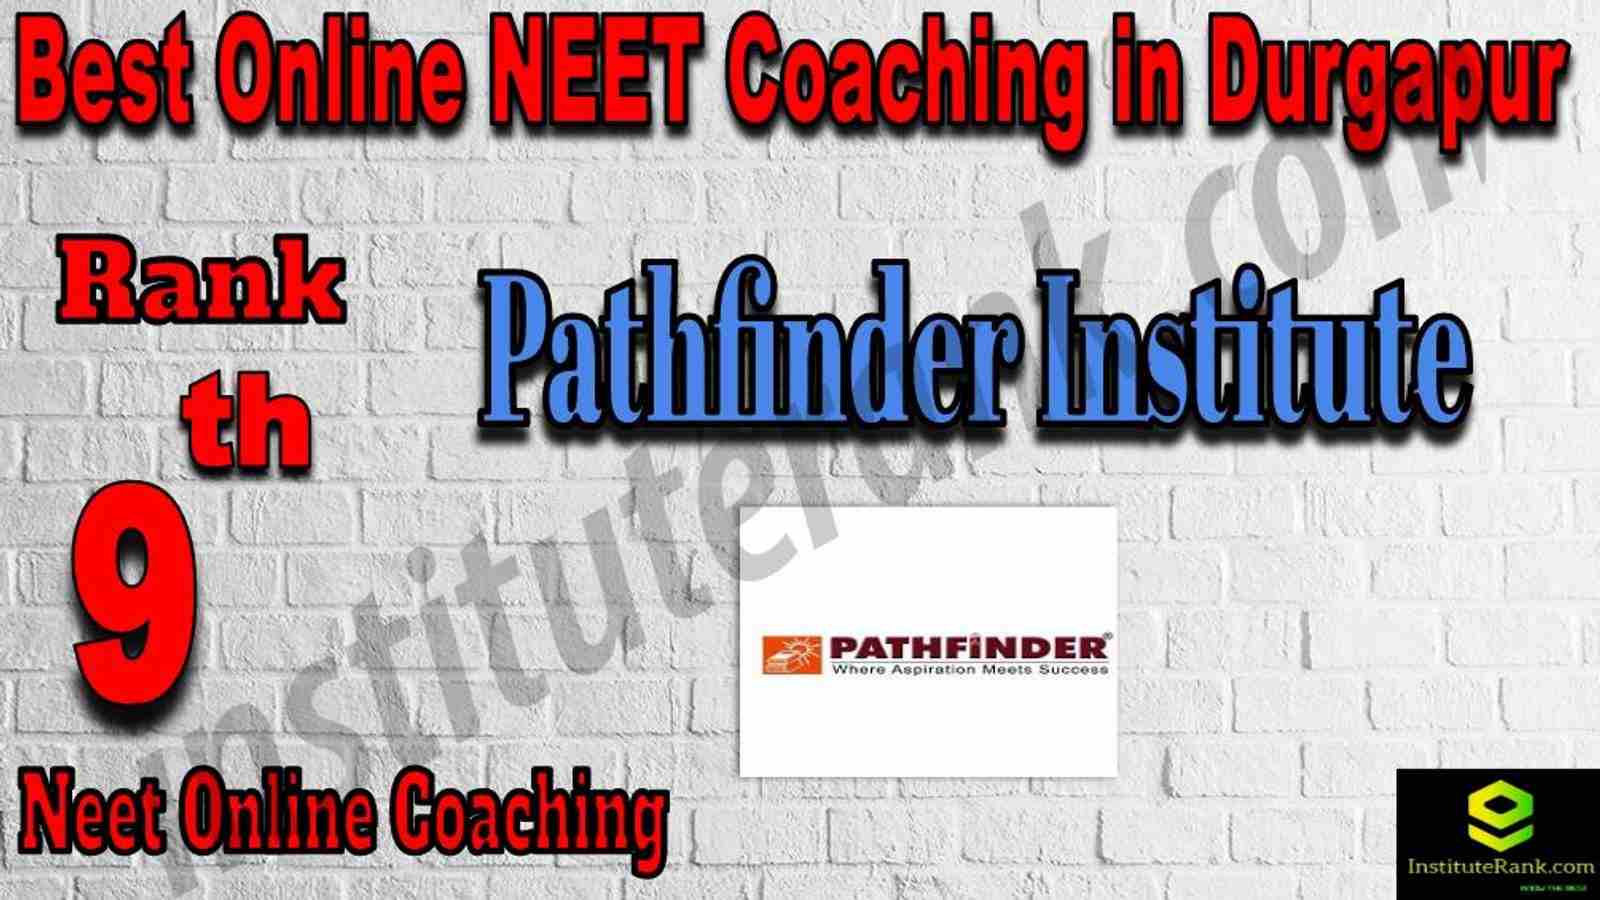 9th Best Online Neet Coaching in Durgapur